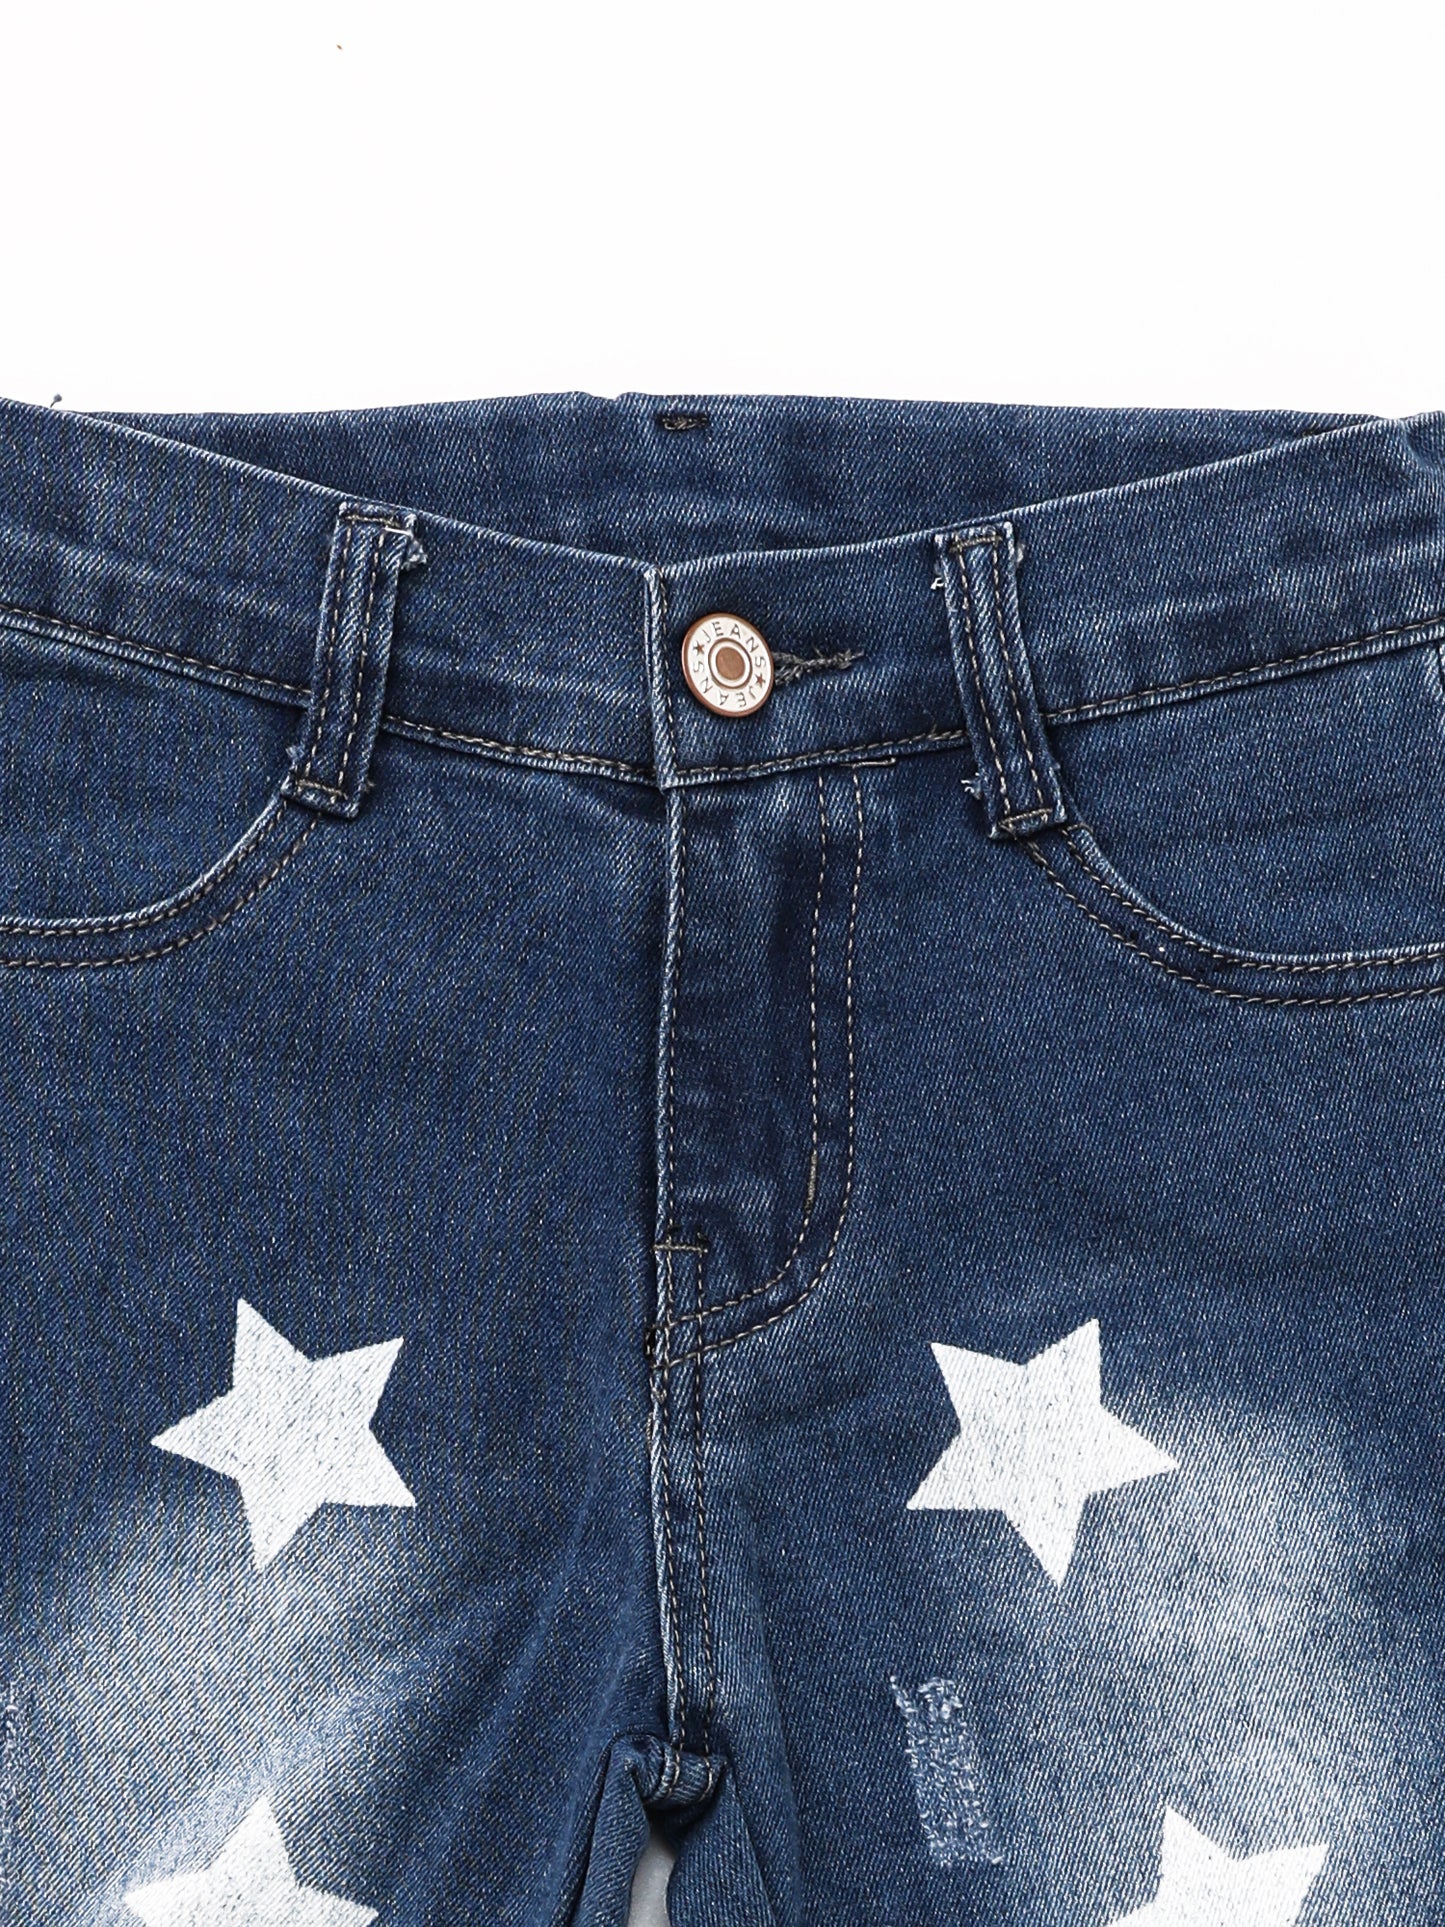 Kids Stars Printed Flare Jeans